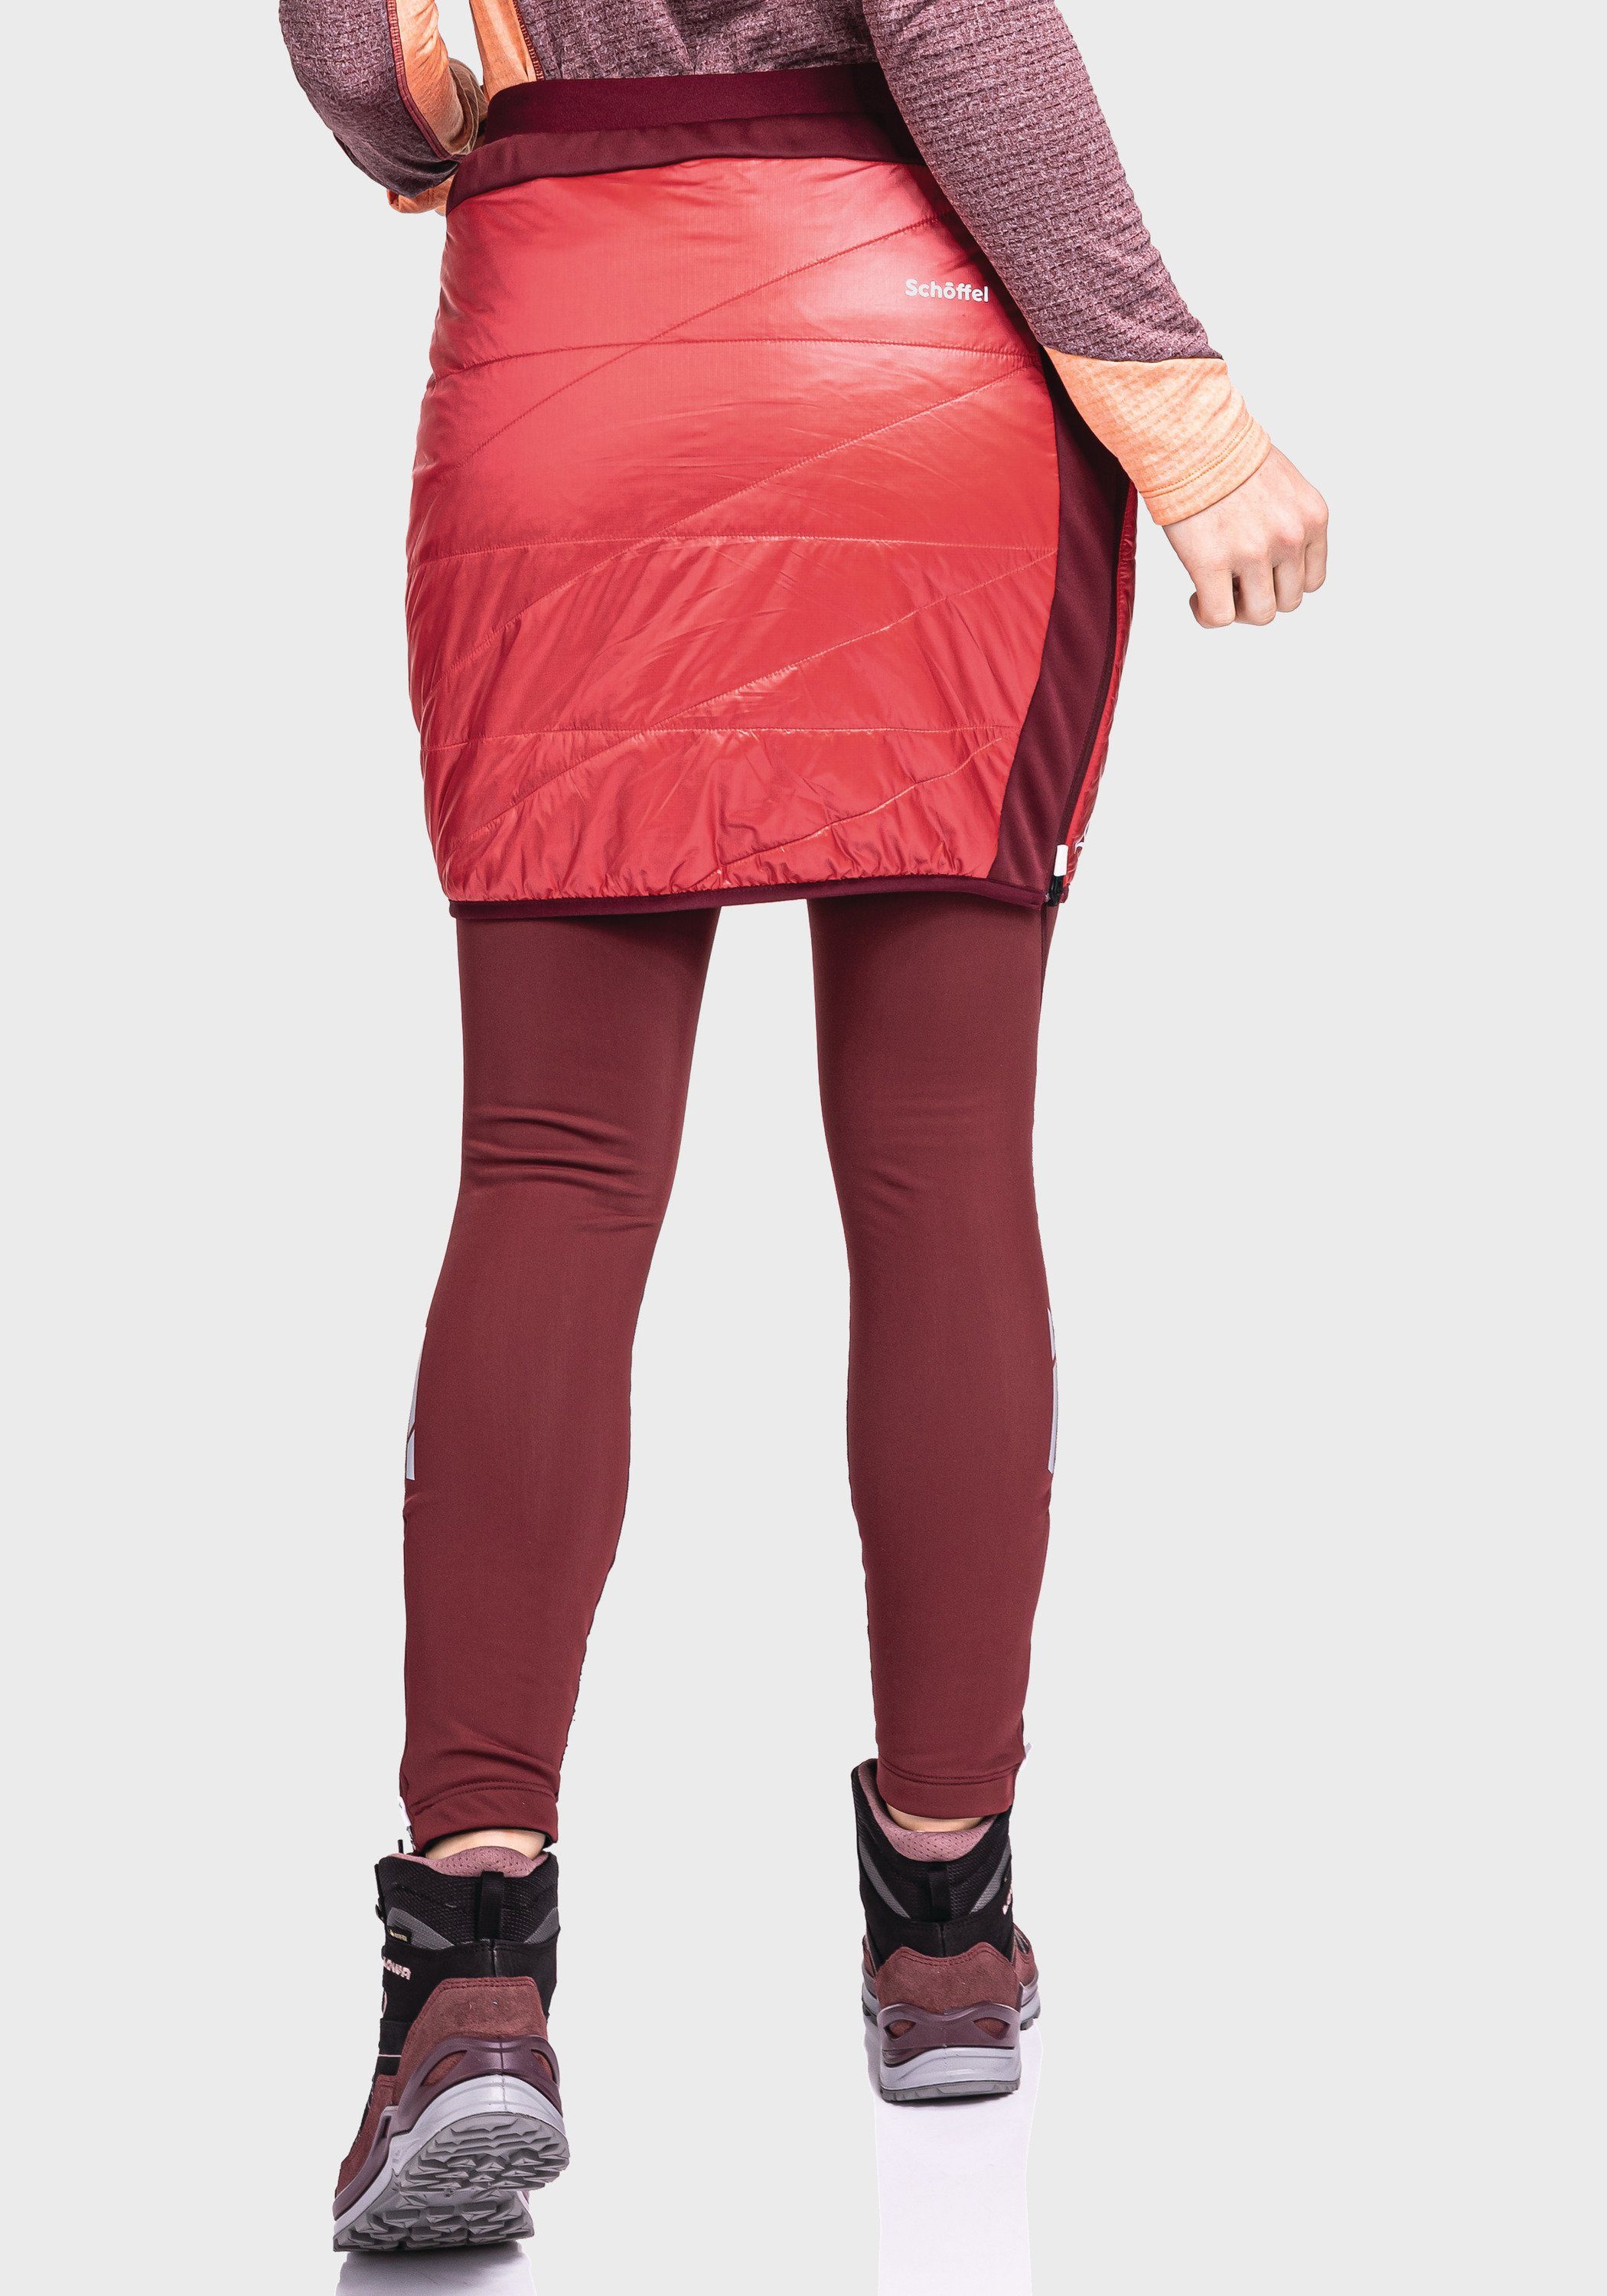 L Thermo Schöffel Stams rot Skirt Sweatrock